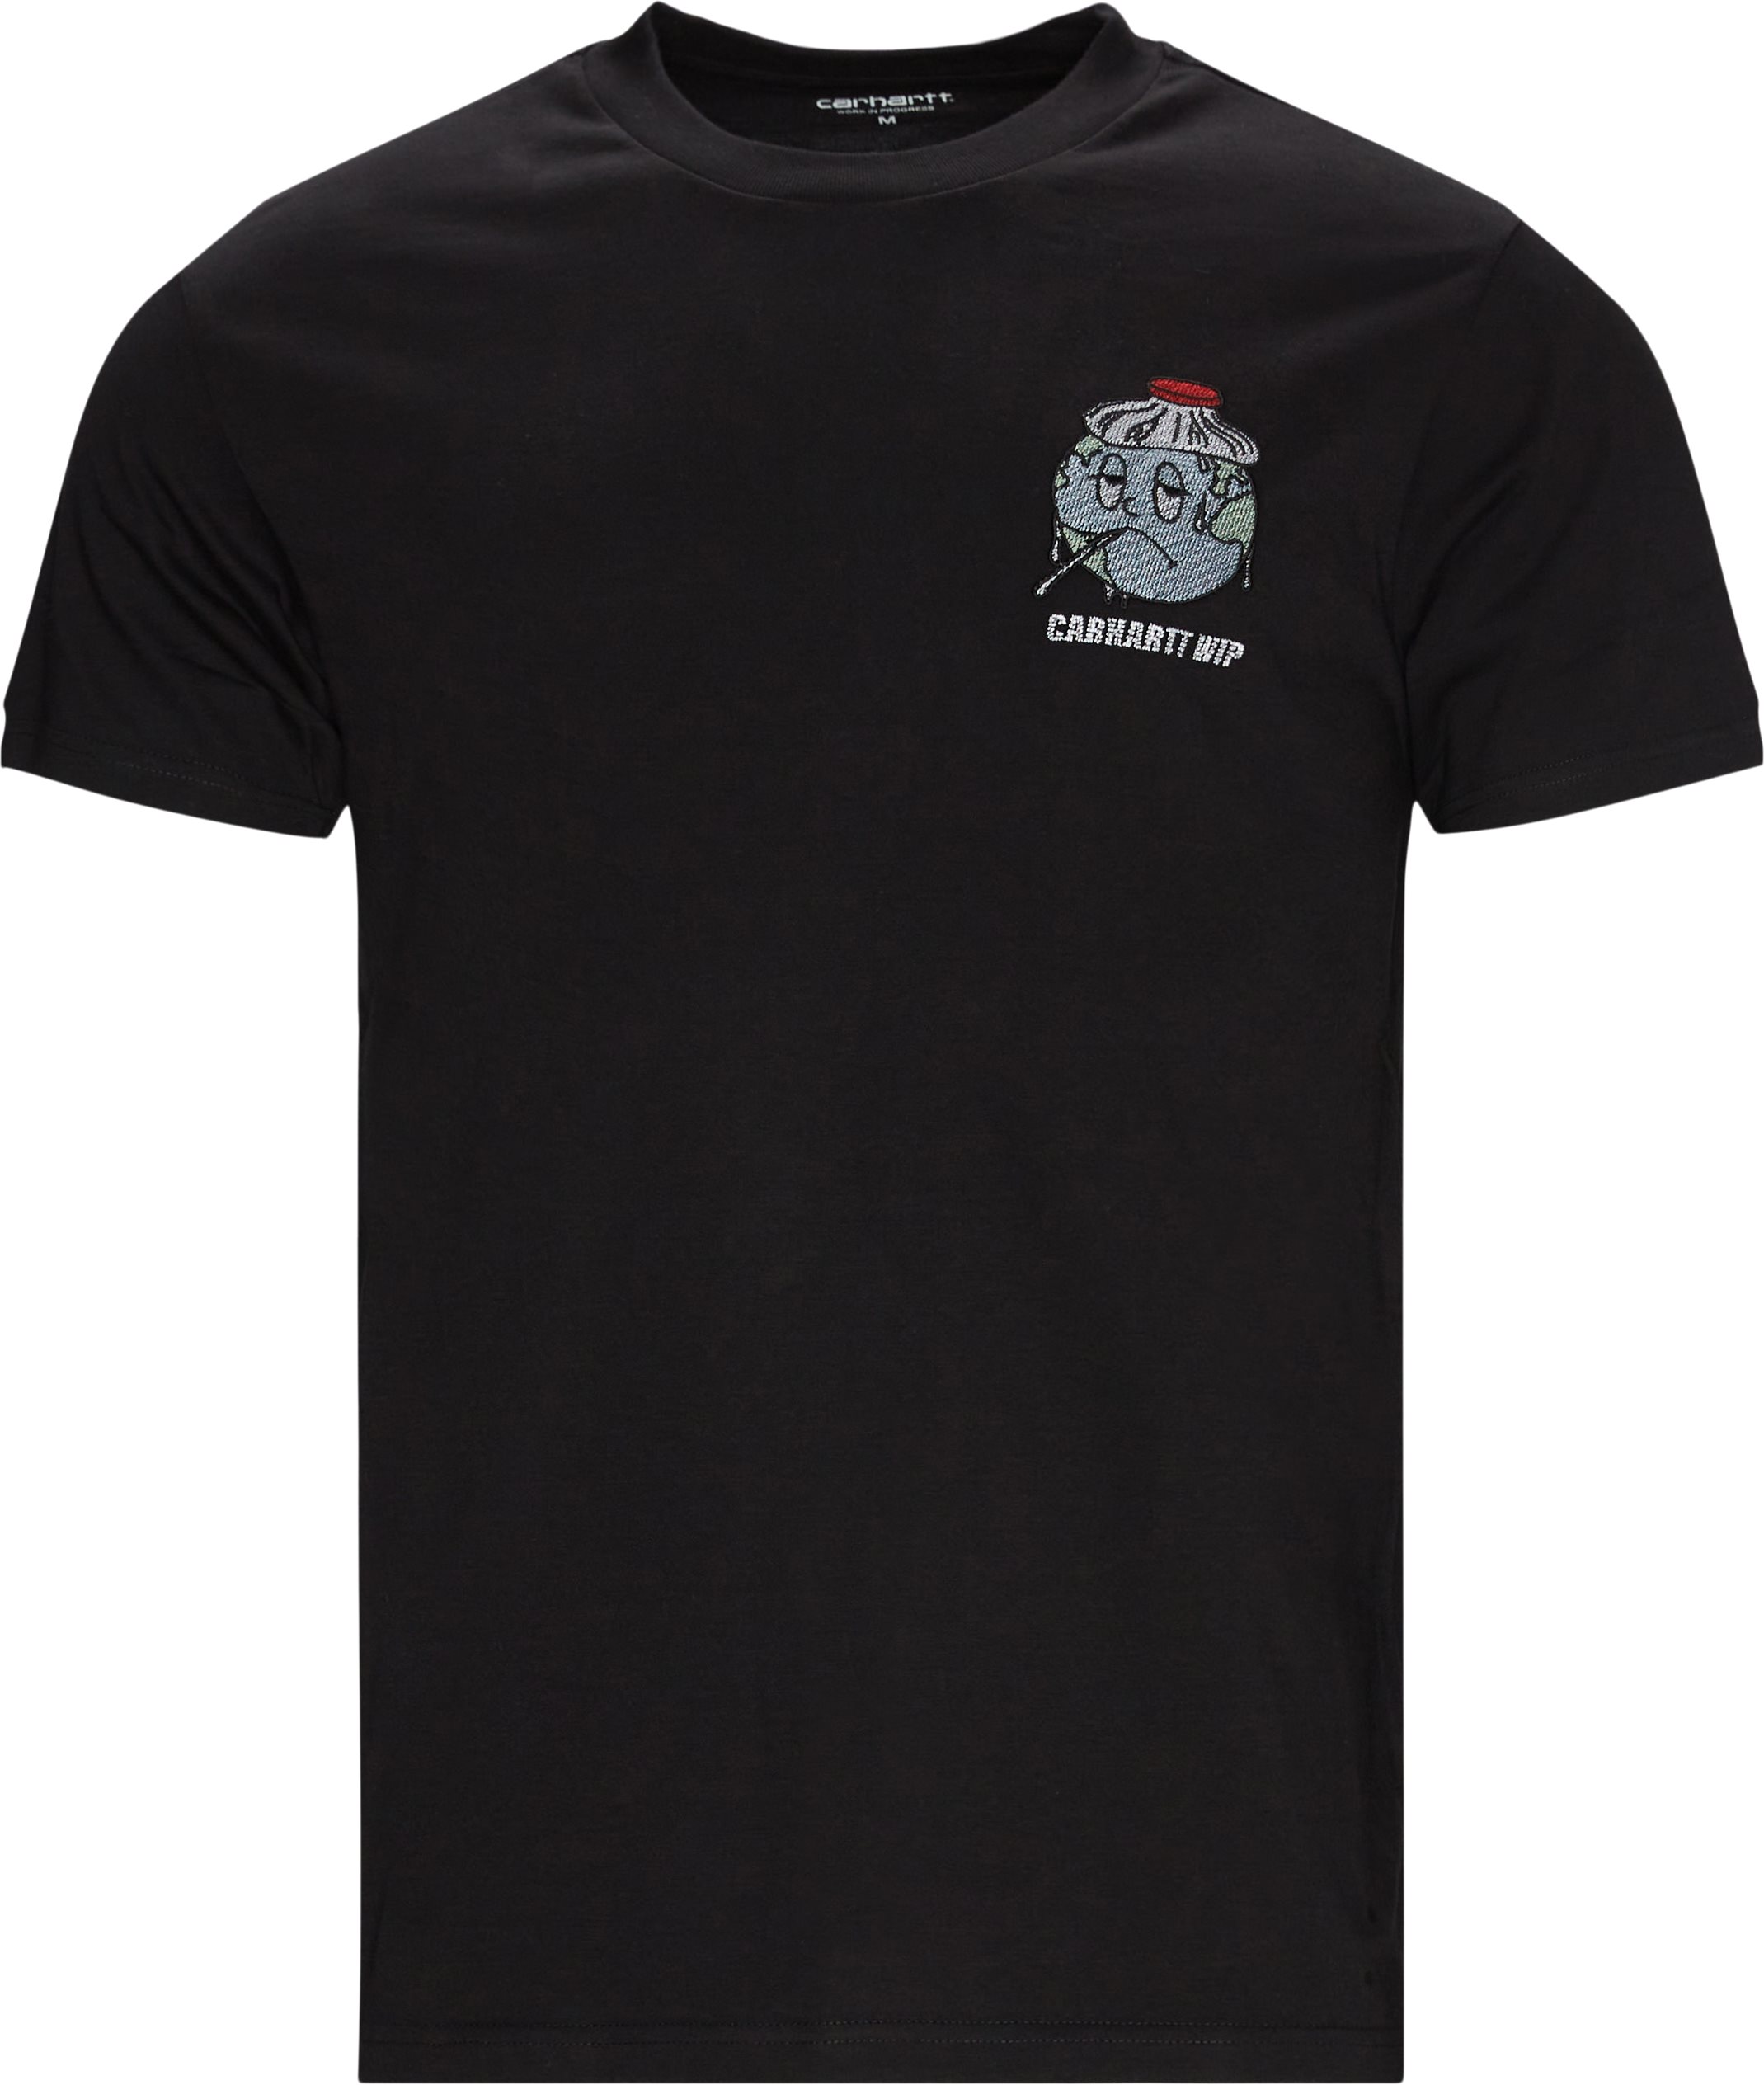 Ss III World Tee - T-shirts - Regular fit - Black